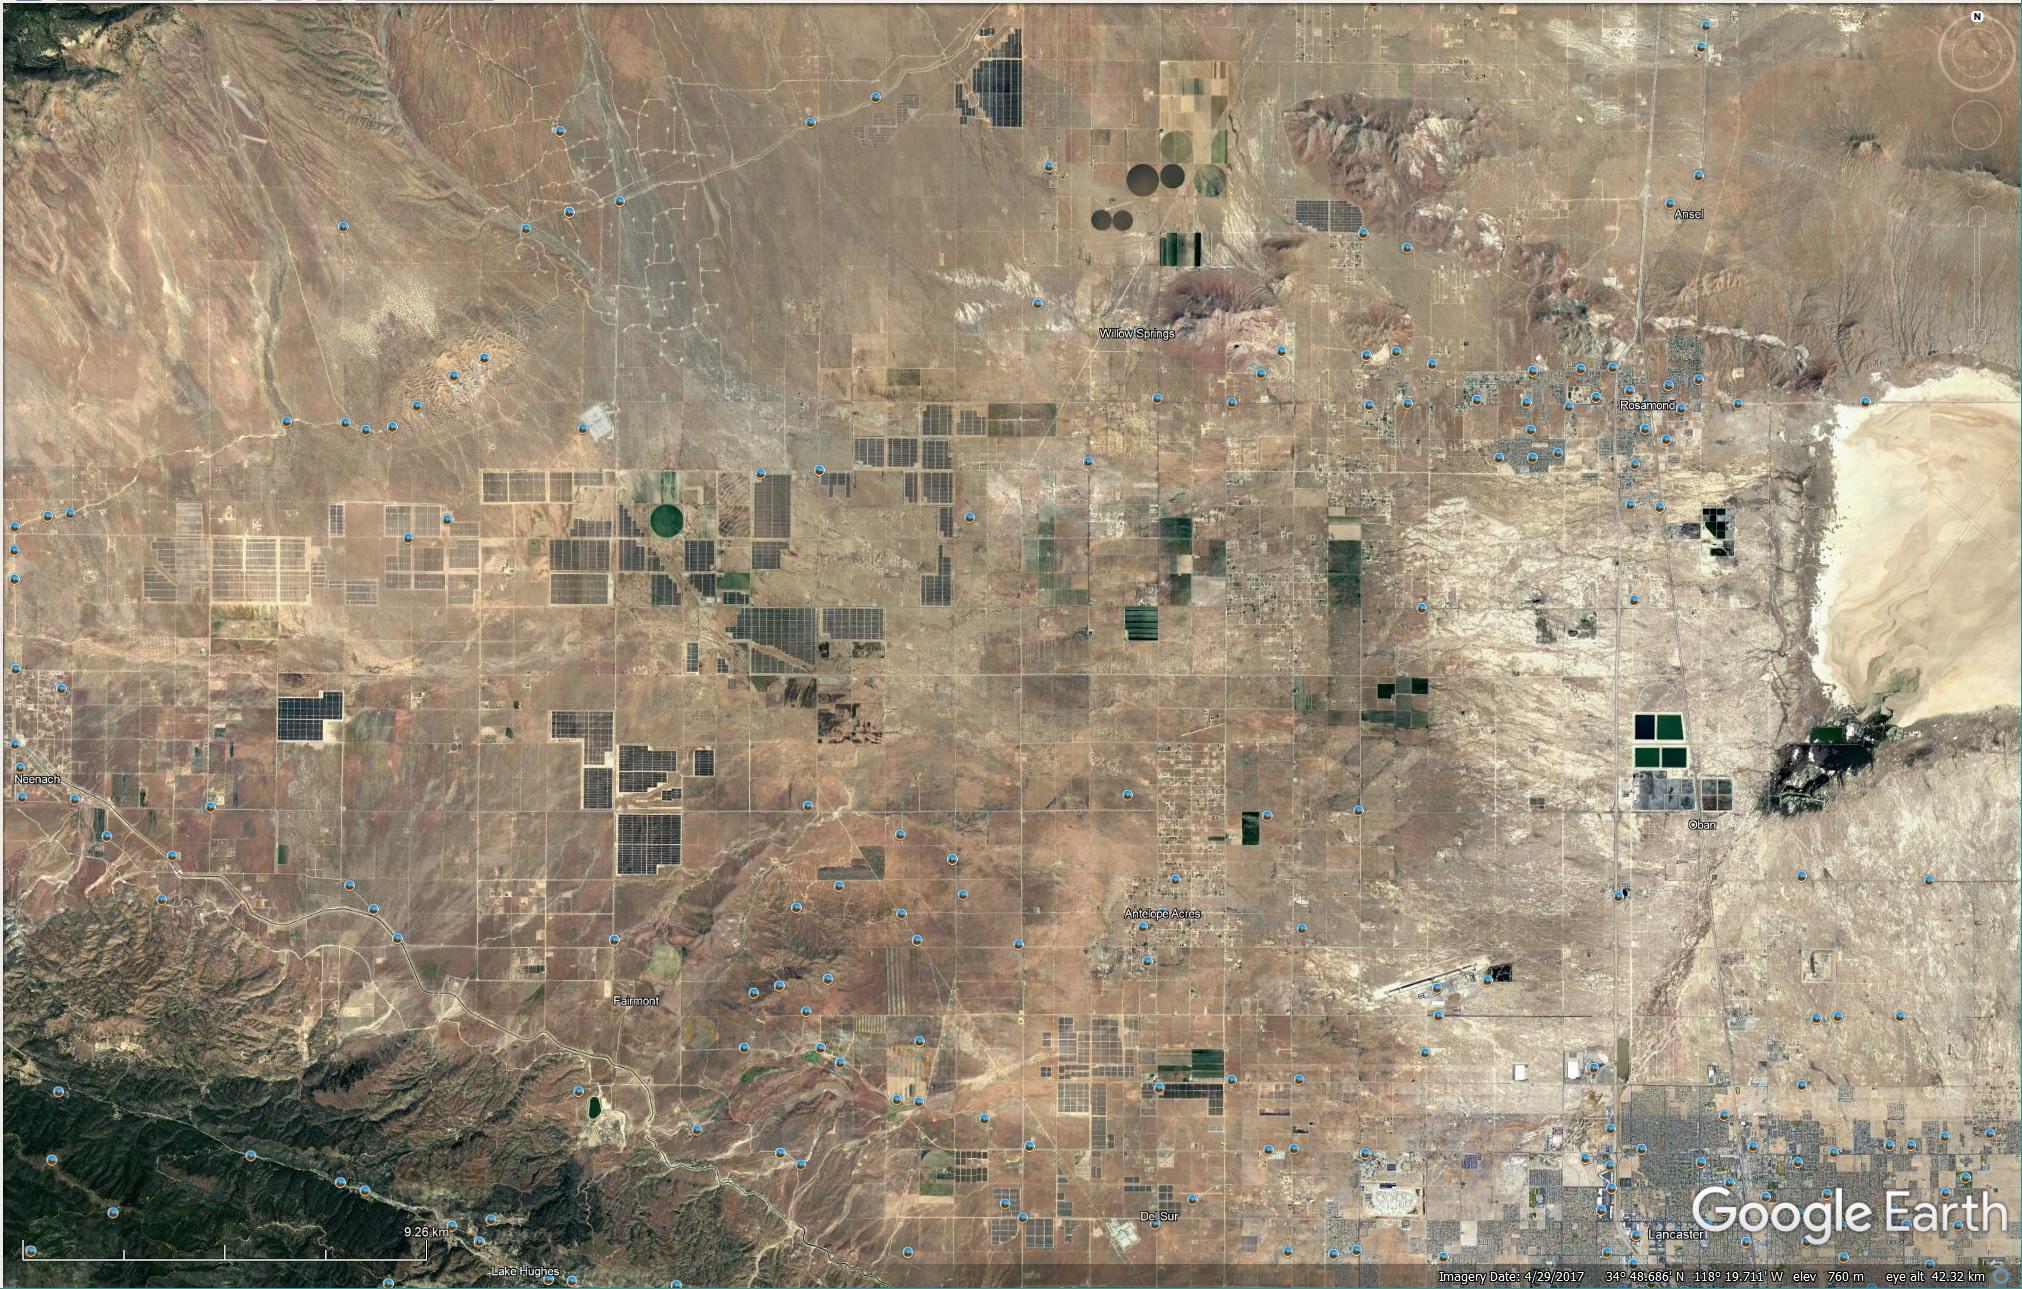 Solar farms in Antelope Valley